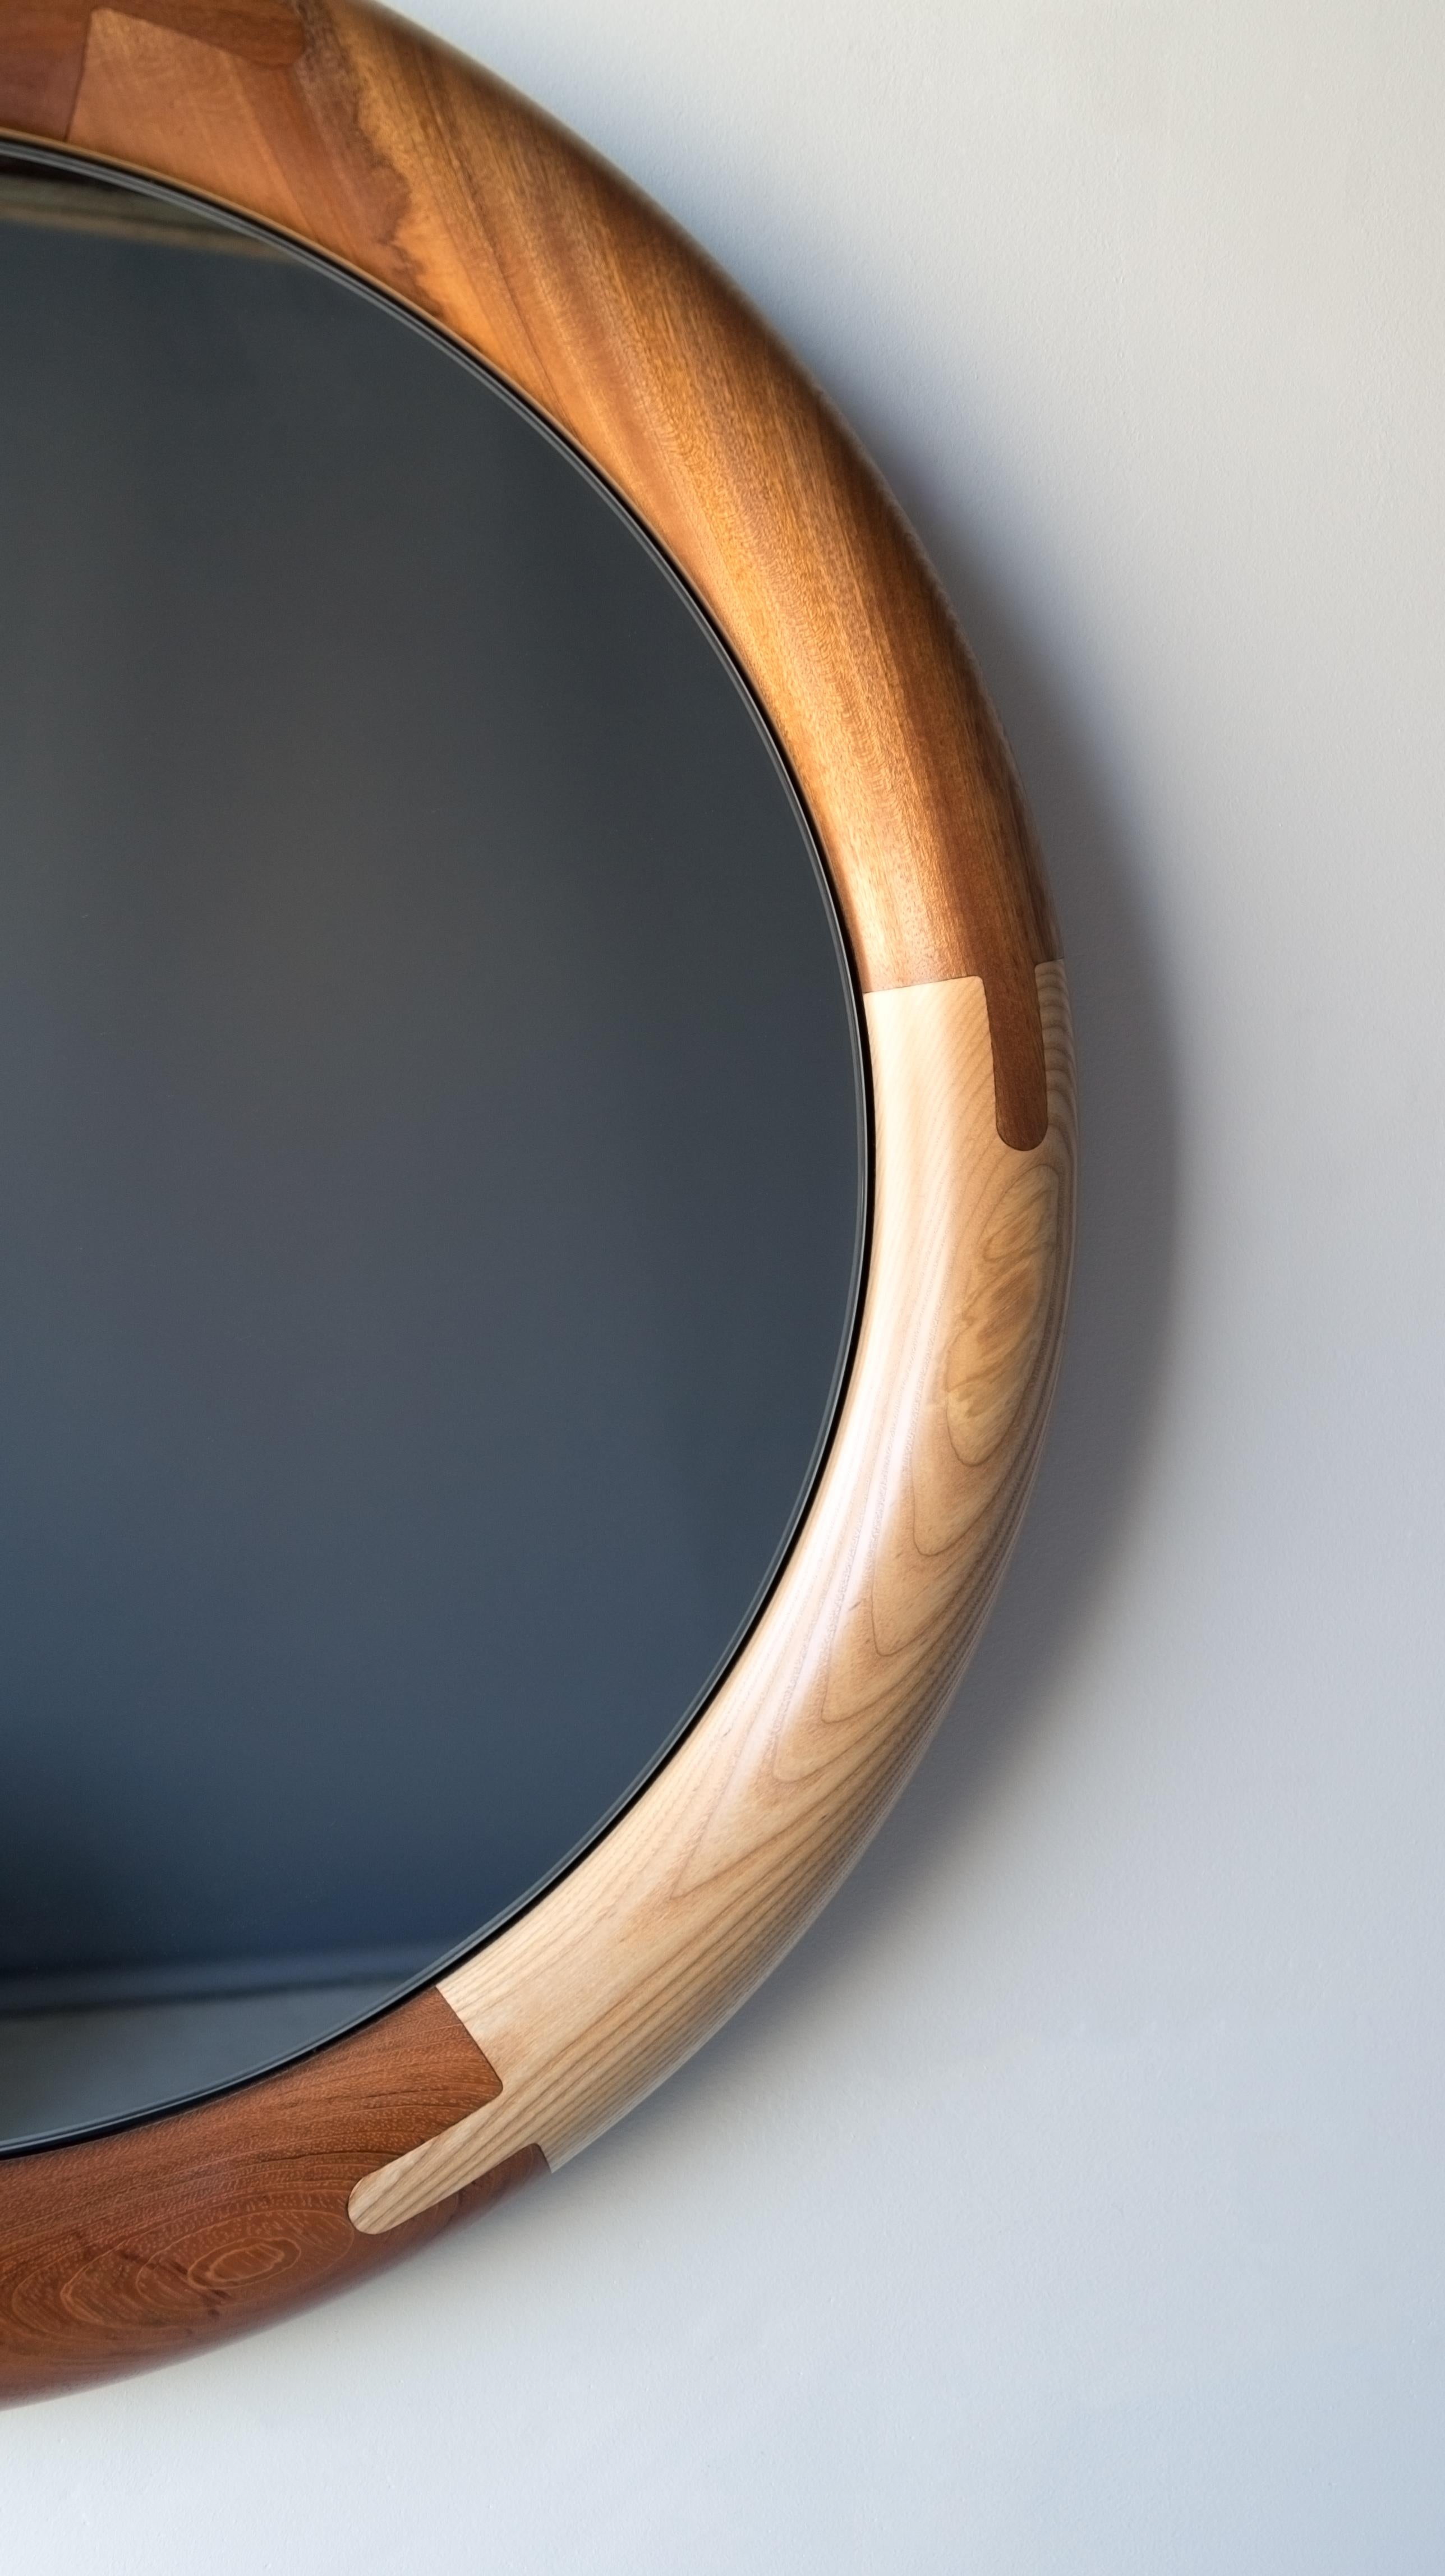 Halo Mirror Round Birnam Wood Studio In New Condition For Sale In Ridgewood, NY